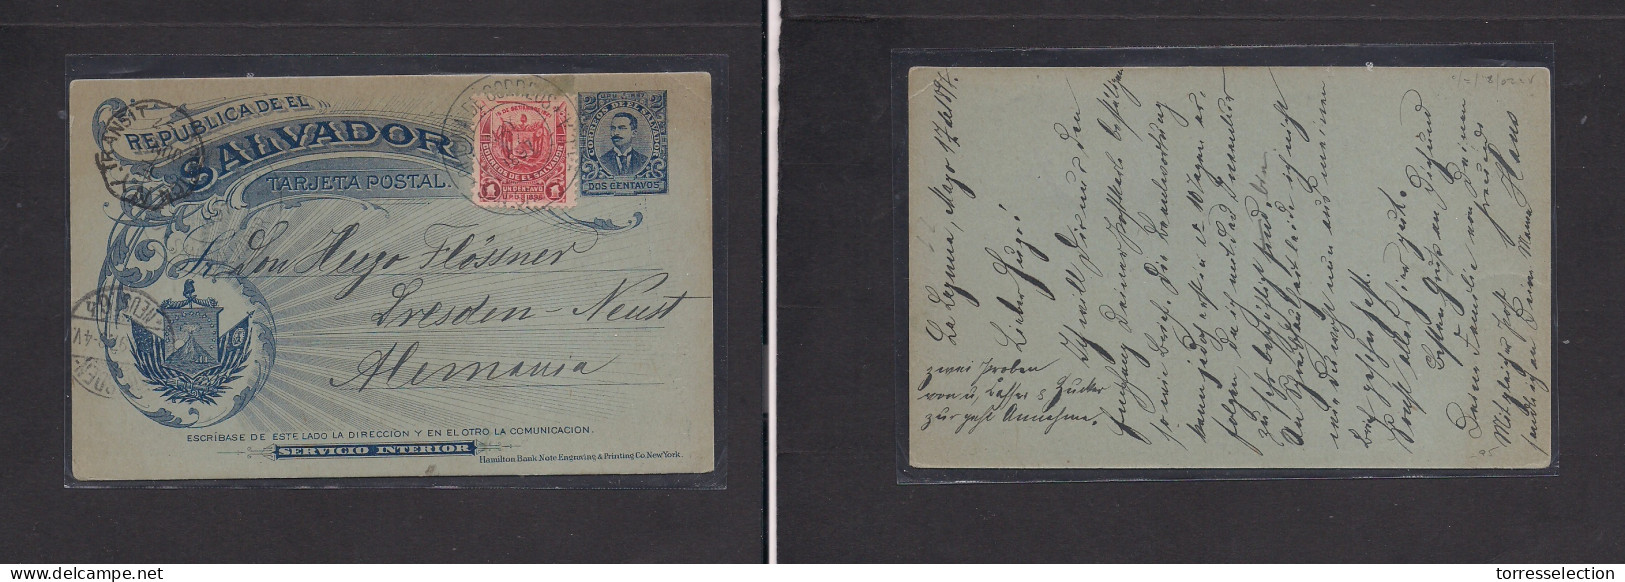 SALVADOR, EL. 1897 (May 17) La Laguna - Germany, Dresden 2c Black Stat Card + 1c Red Adtl + Tied Blue Cds. Via NYC. - El Salvador